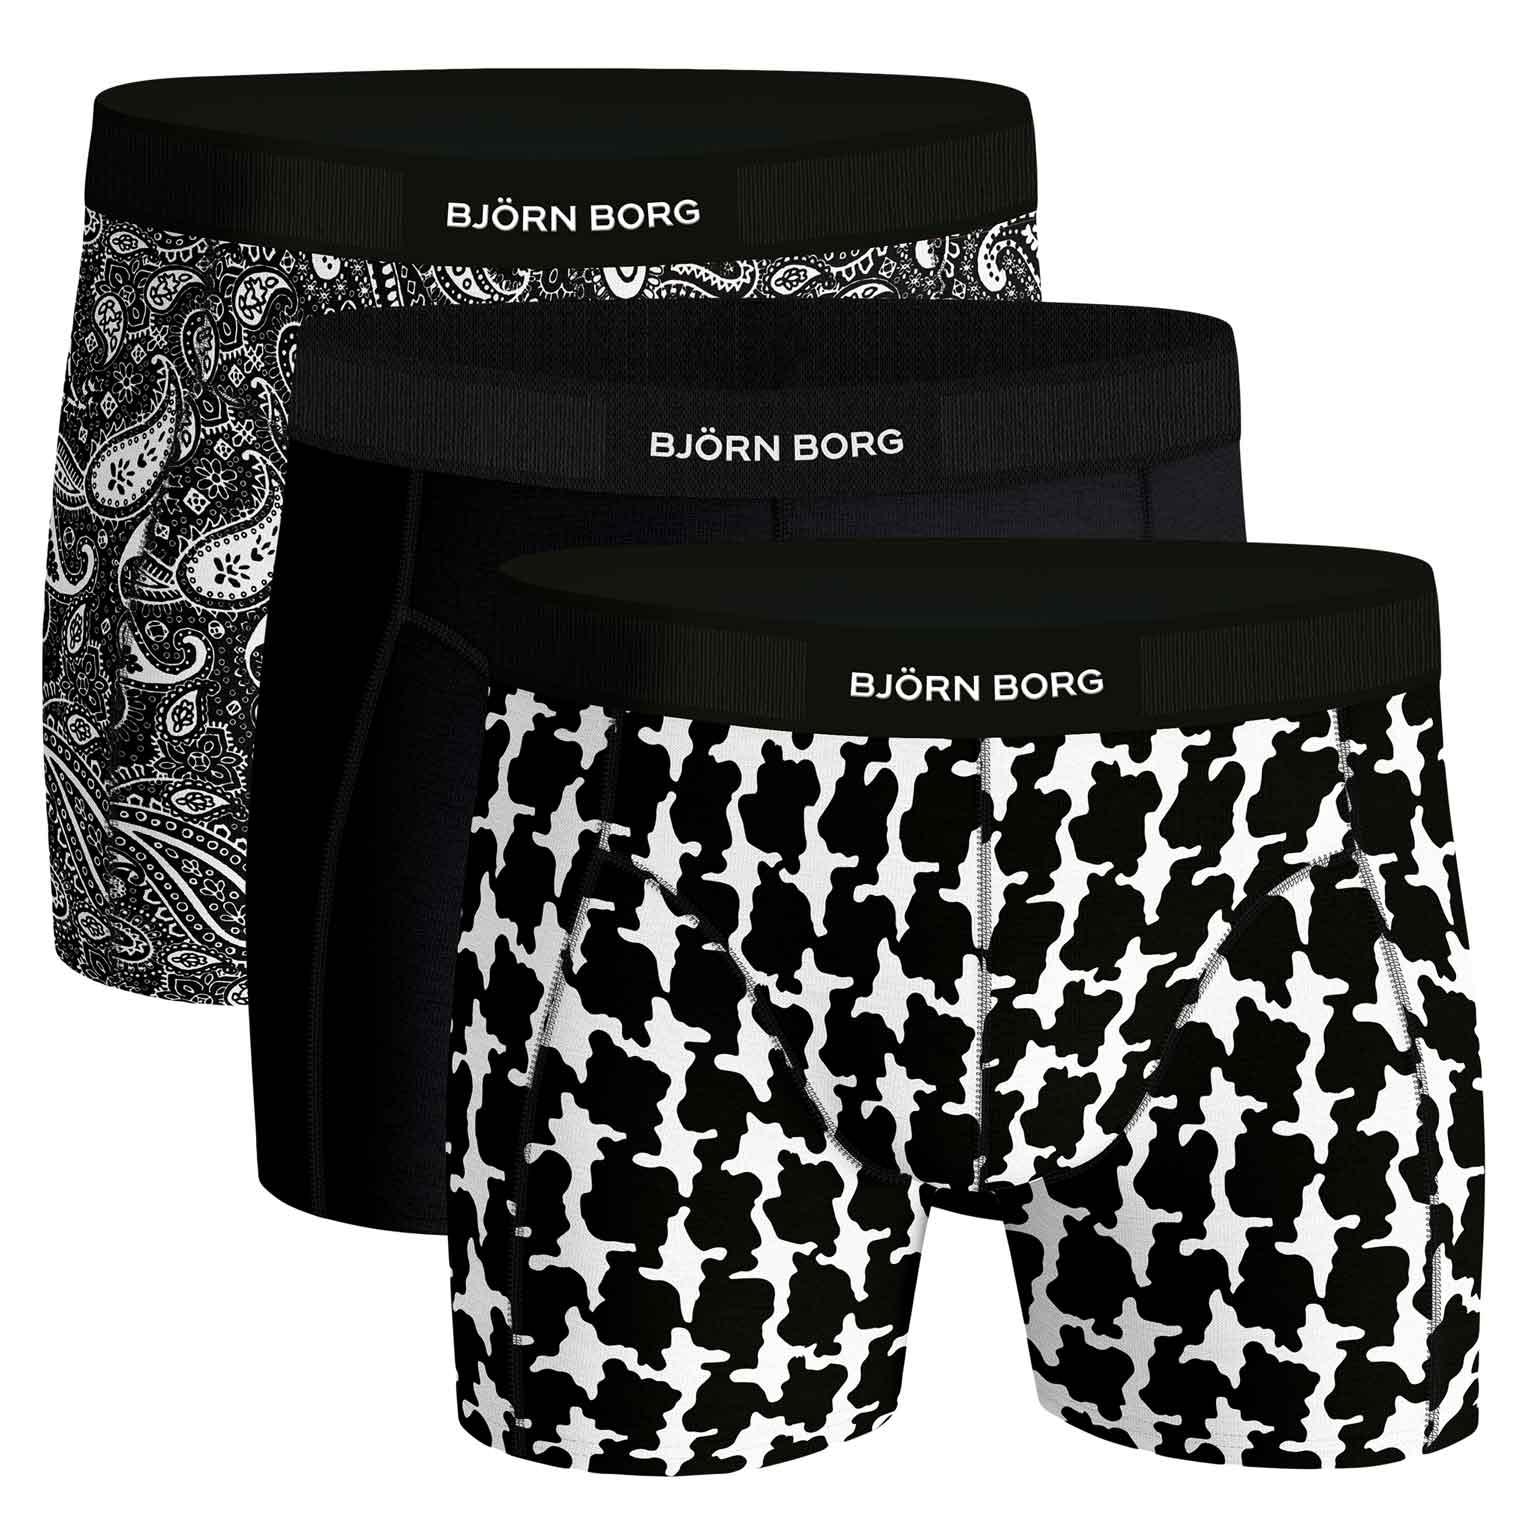 Premium Cotton Shorts - 3 pack